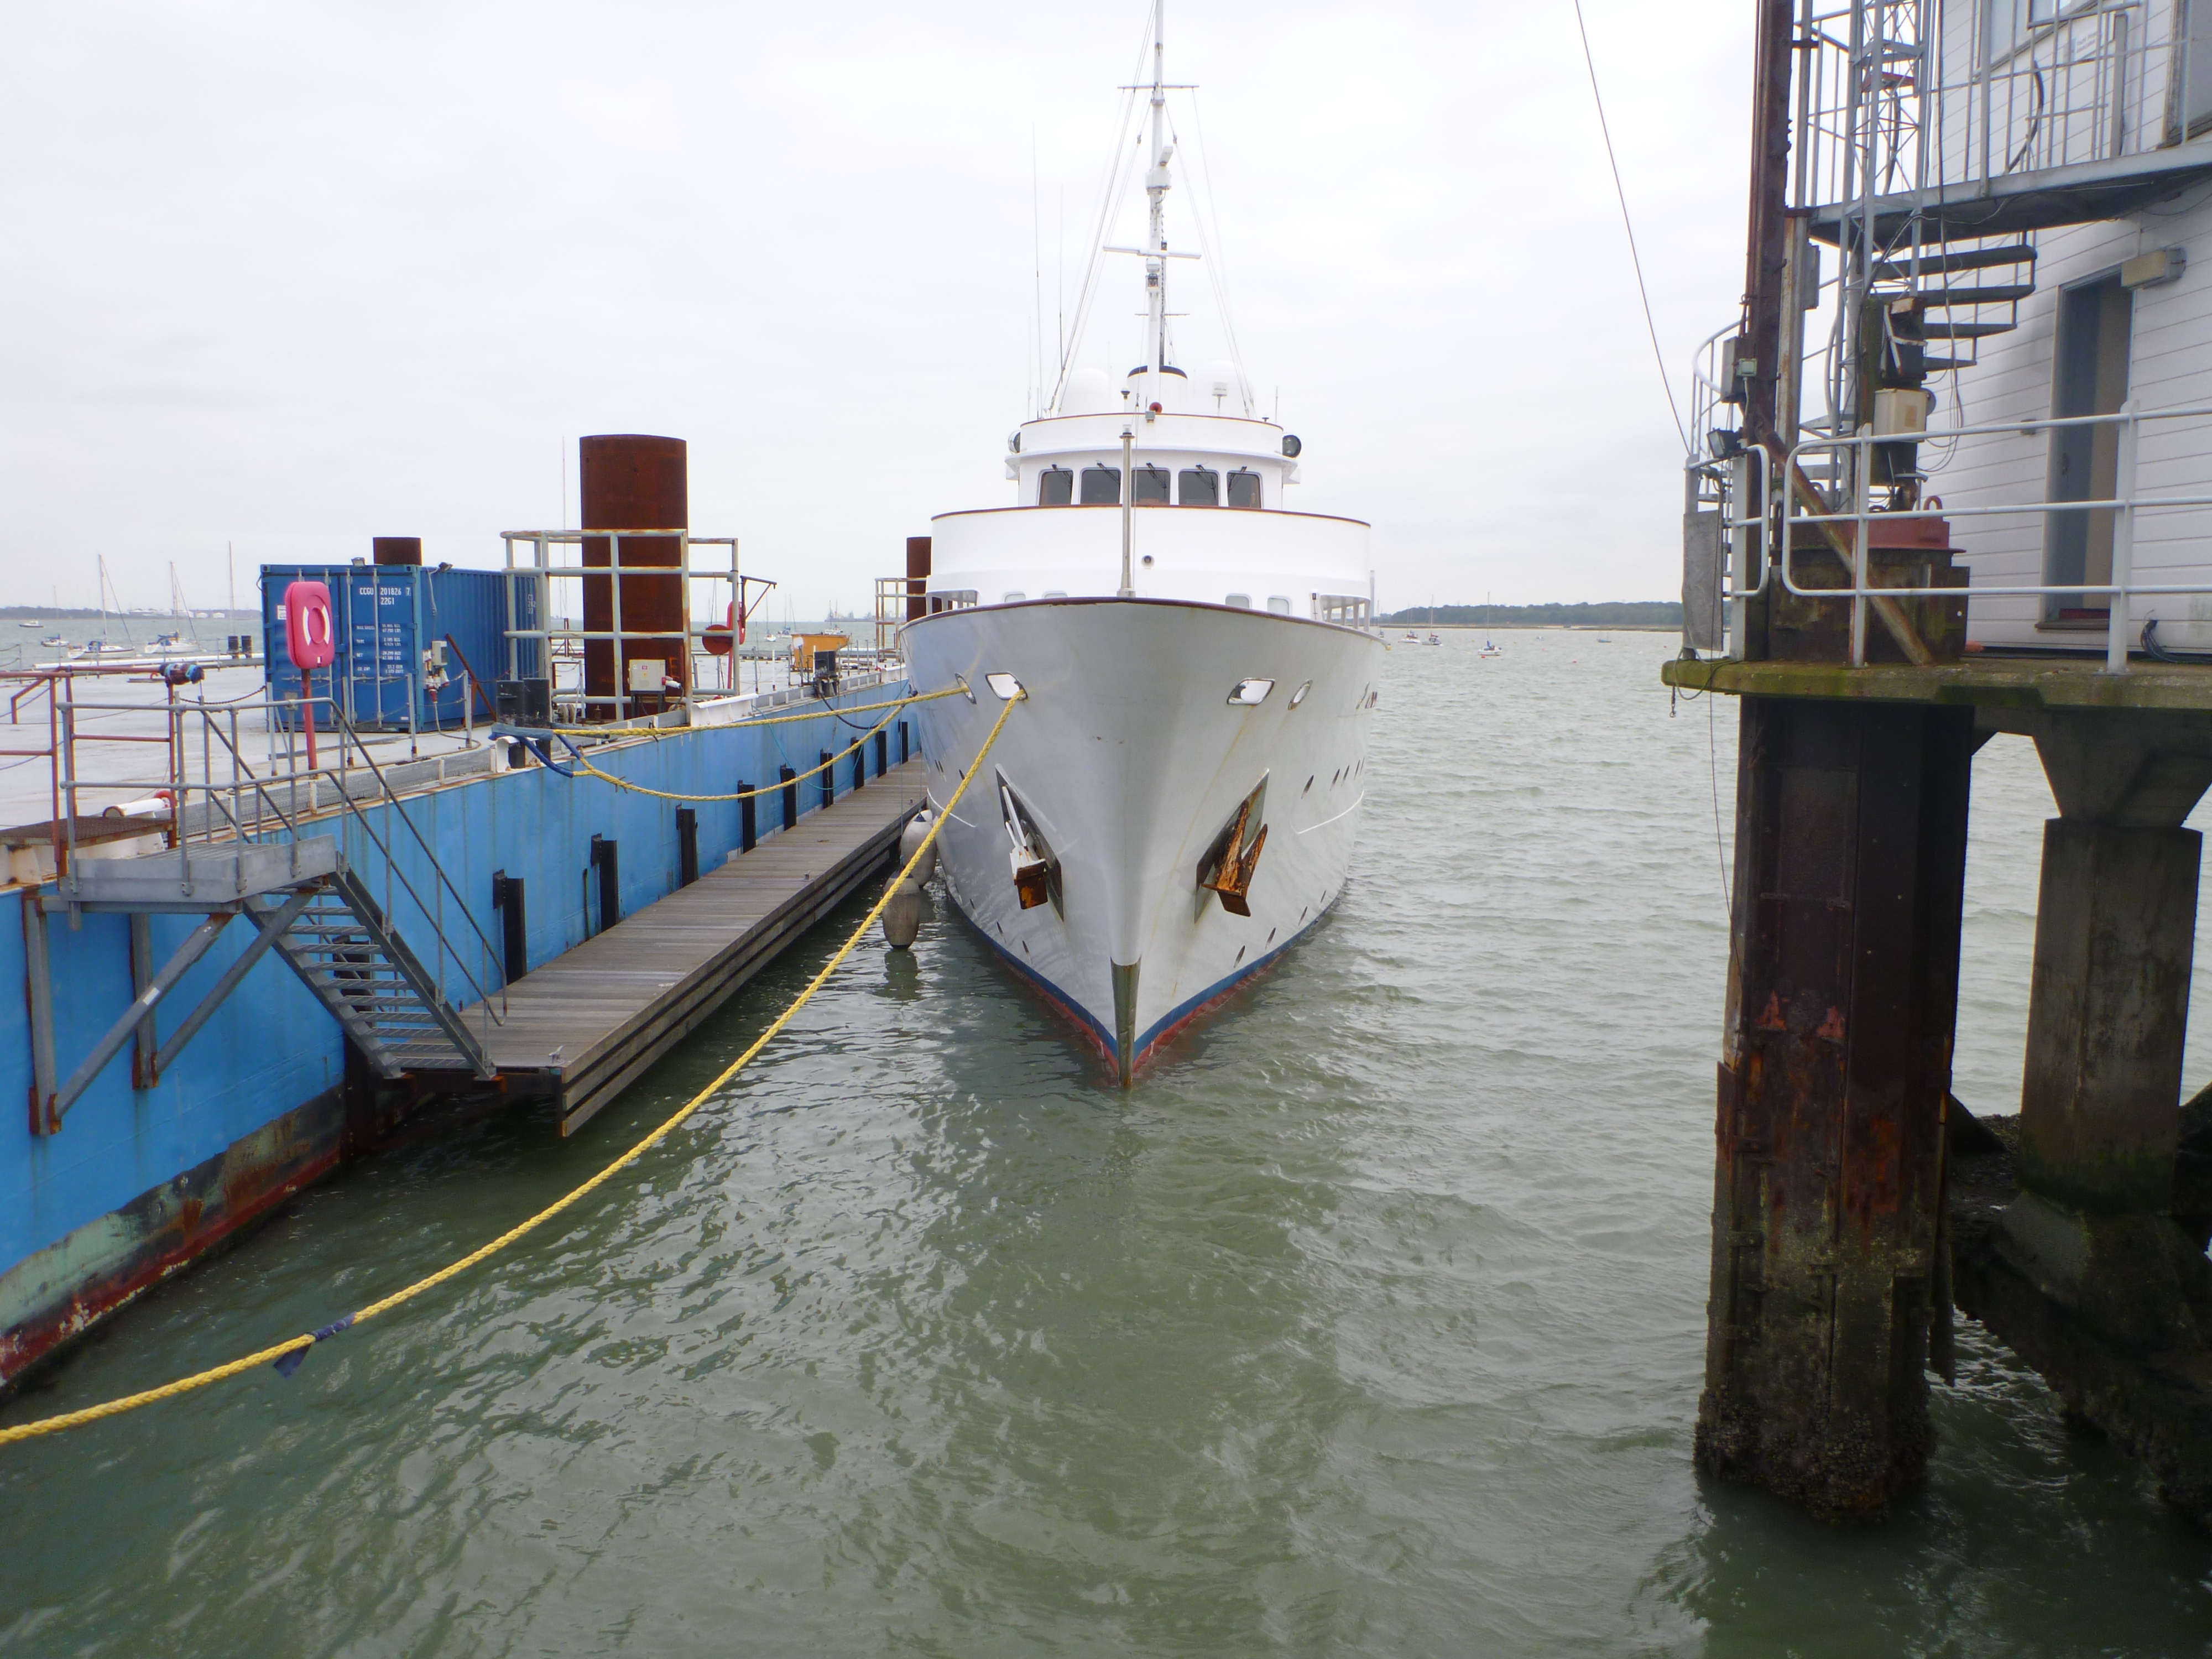 Luxury charter yacht Lady K II (ex Princess Tanya) docked at Solent Refit